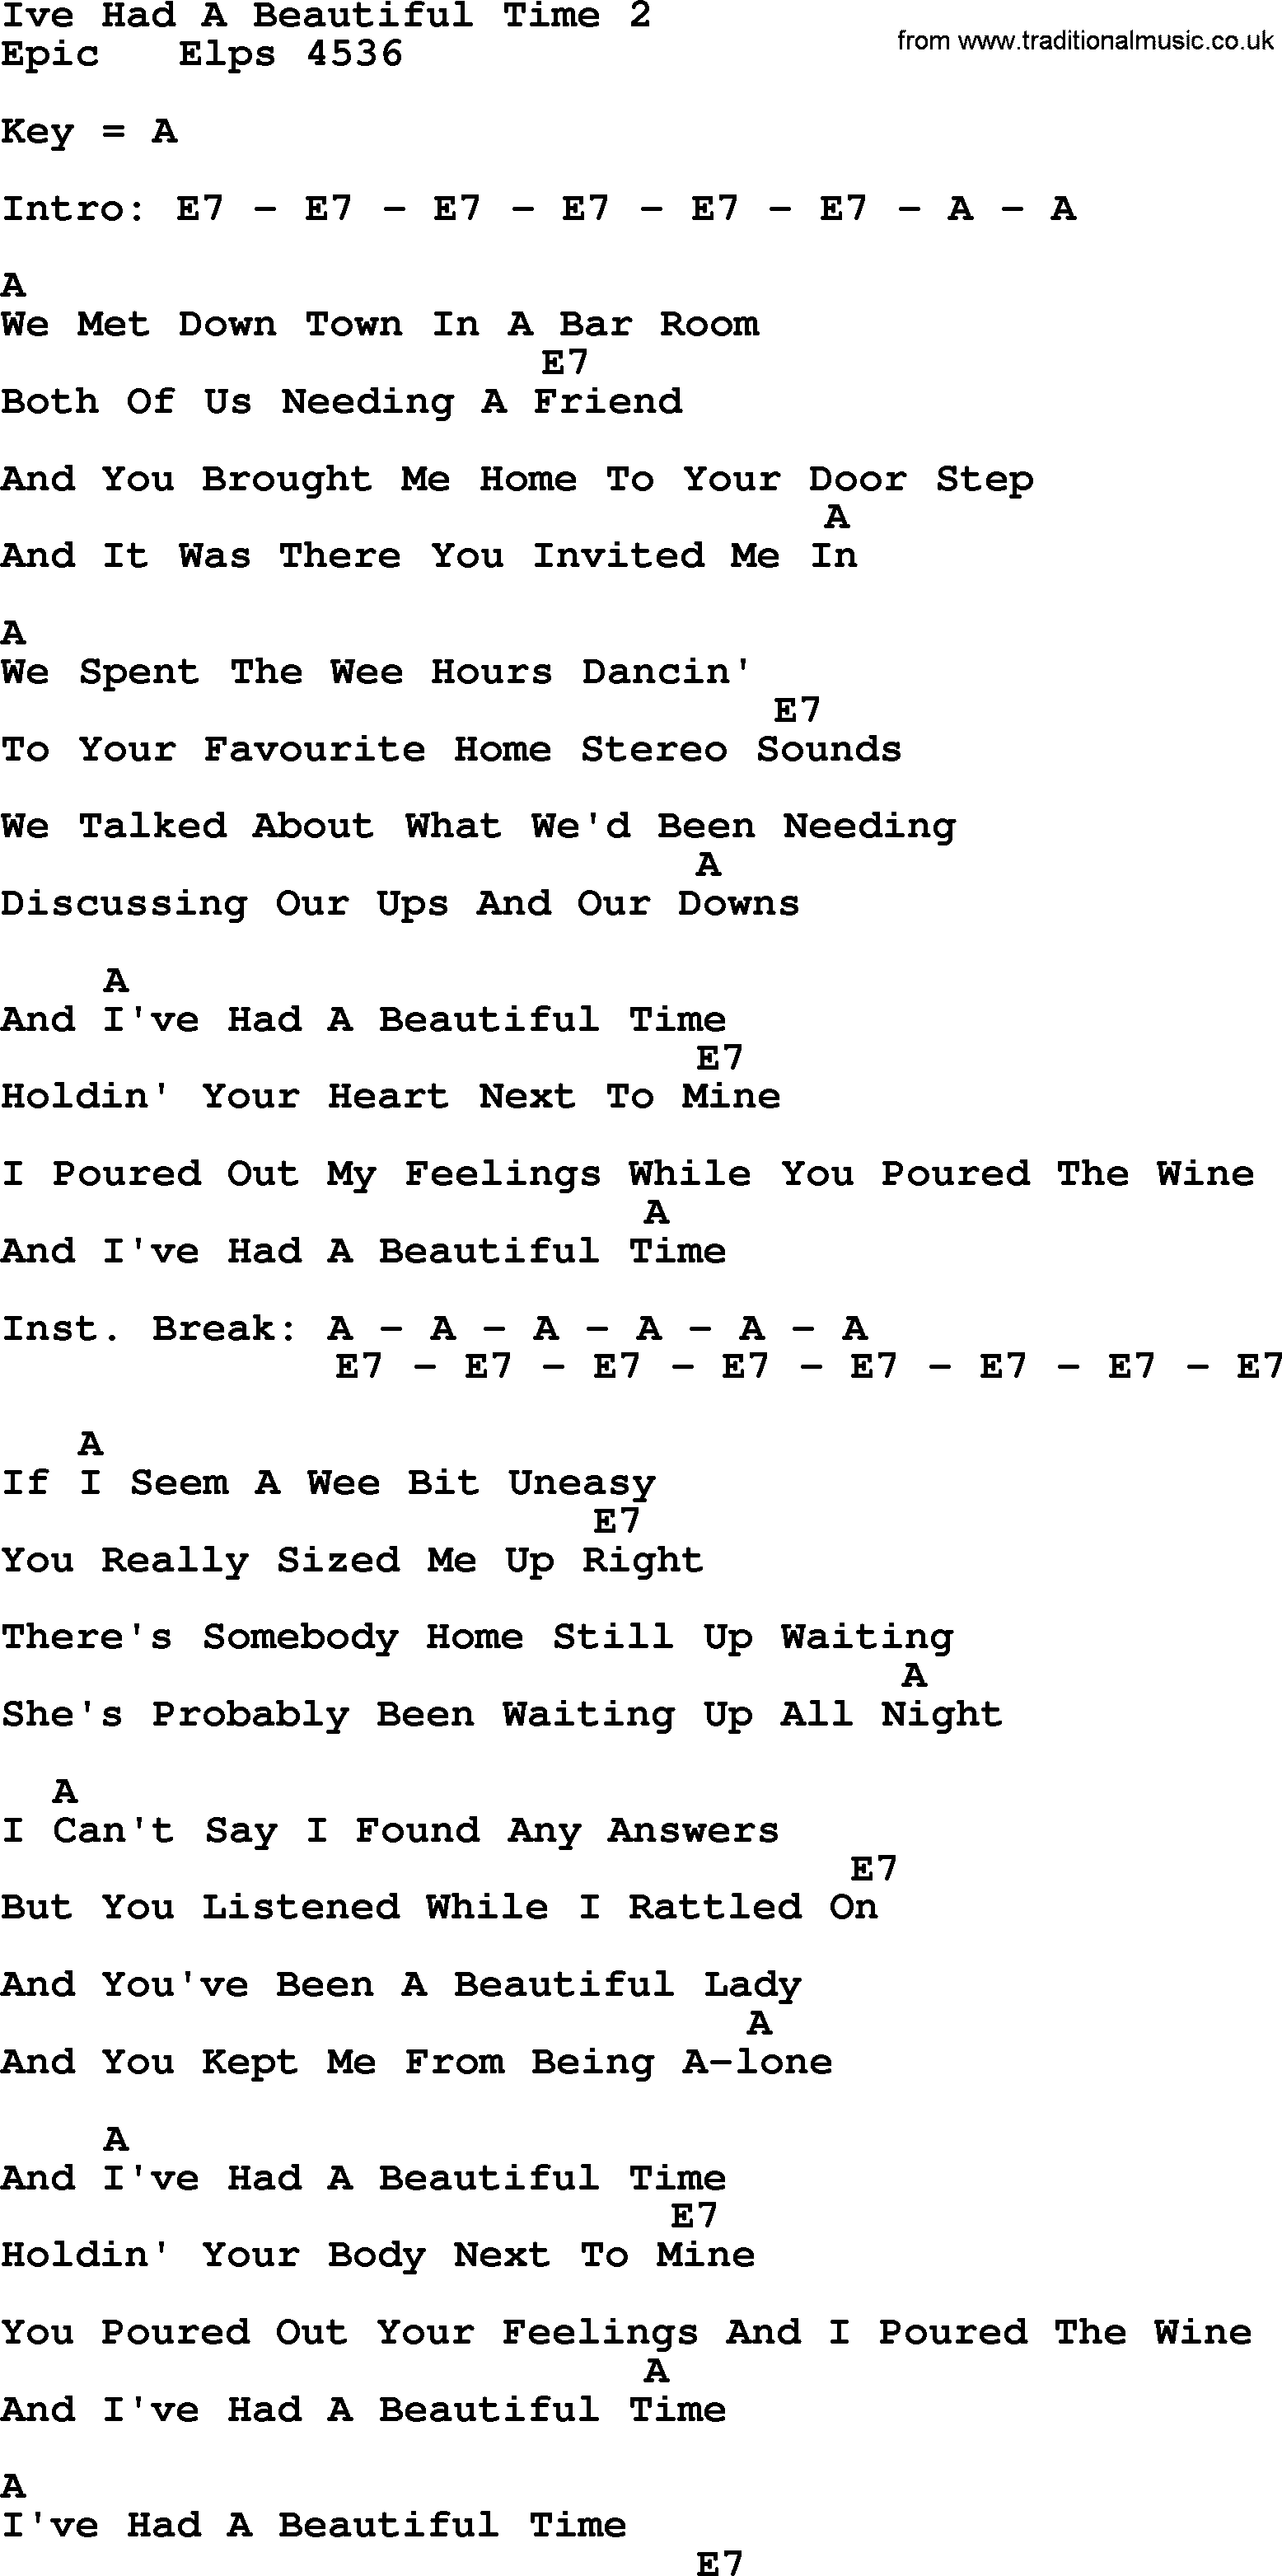 Merle Haggard song: Ive Had A Beautiful Time 2, lyrics and chords